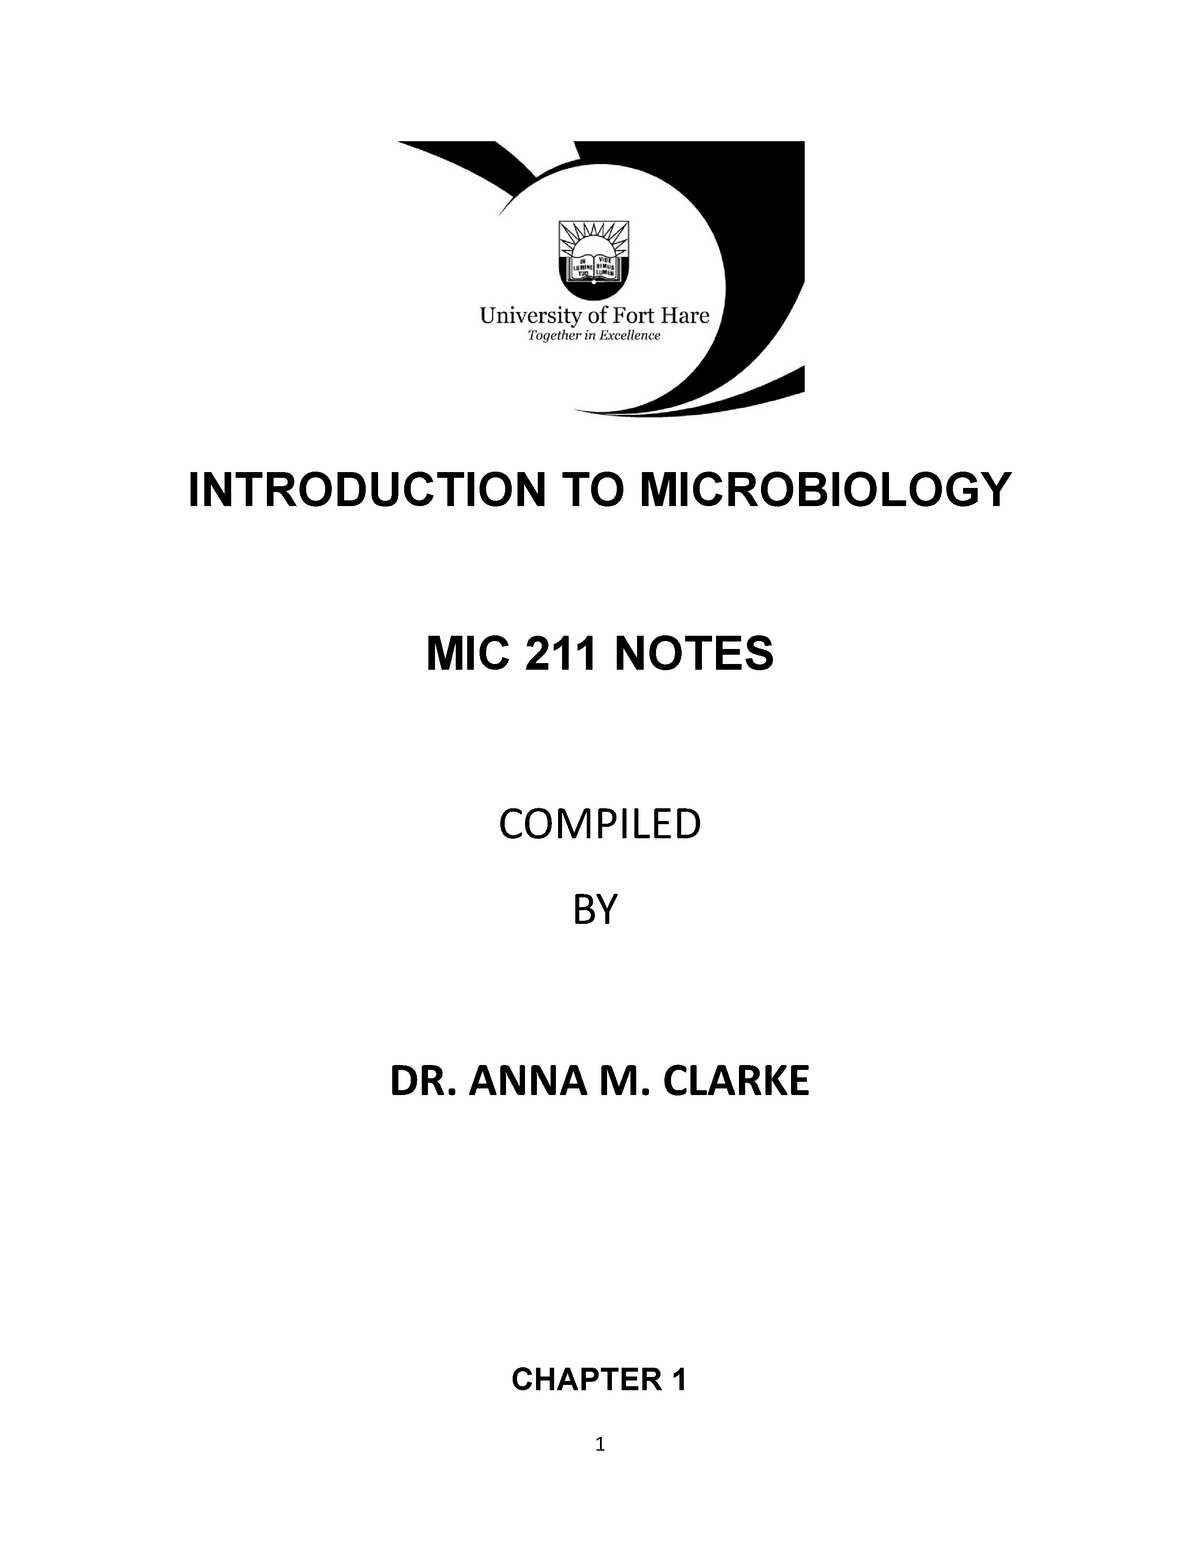 dissertation topics of microbiology